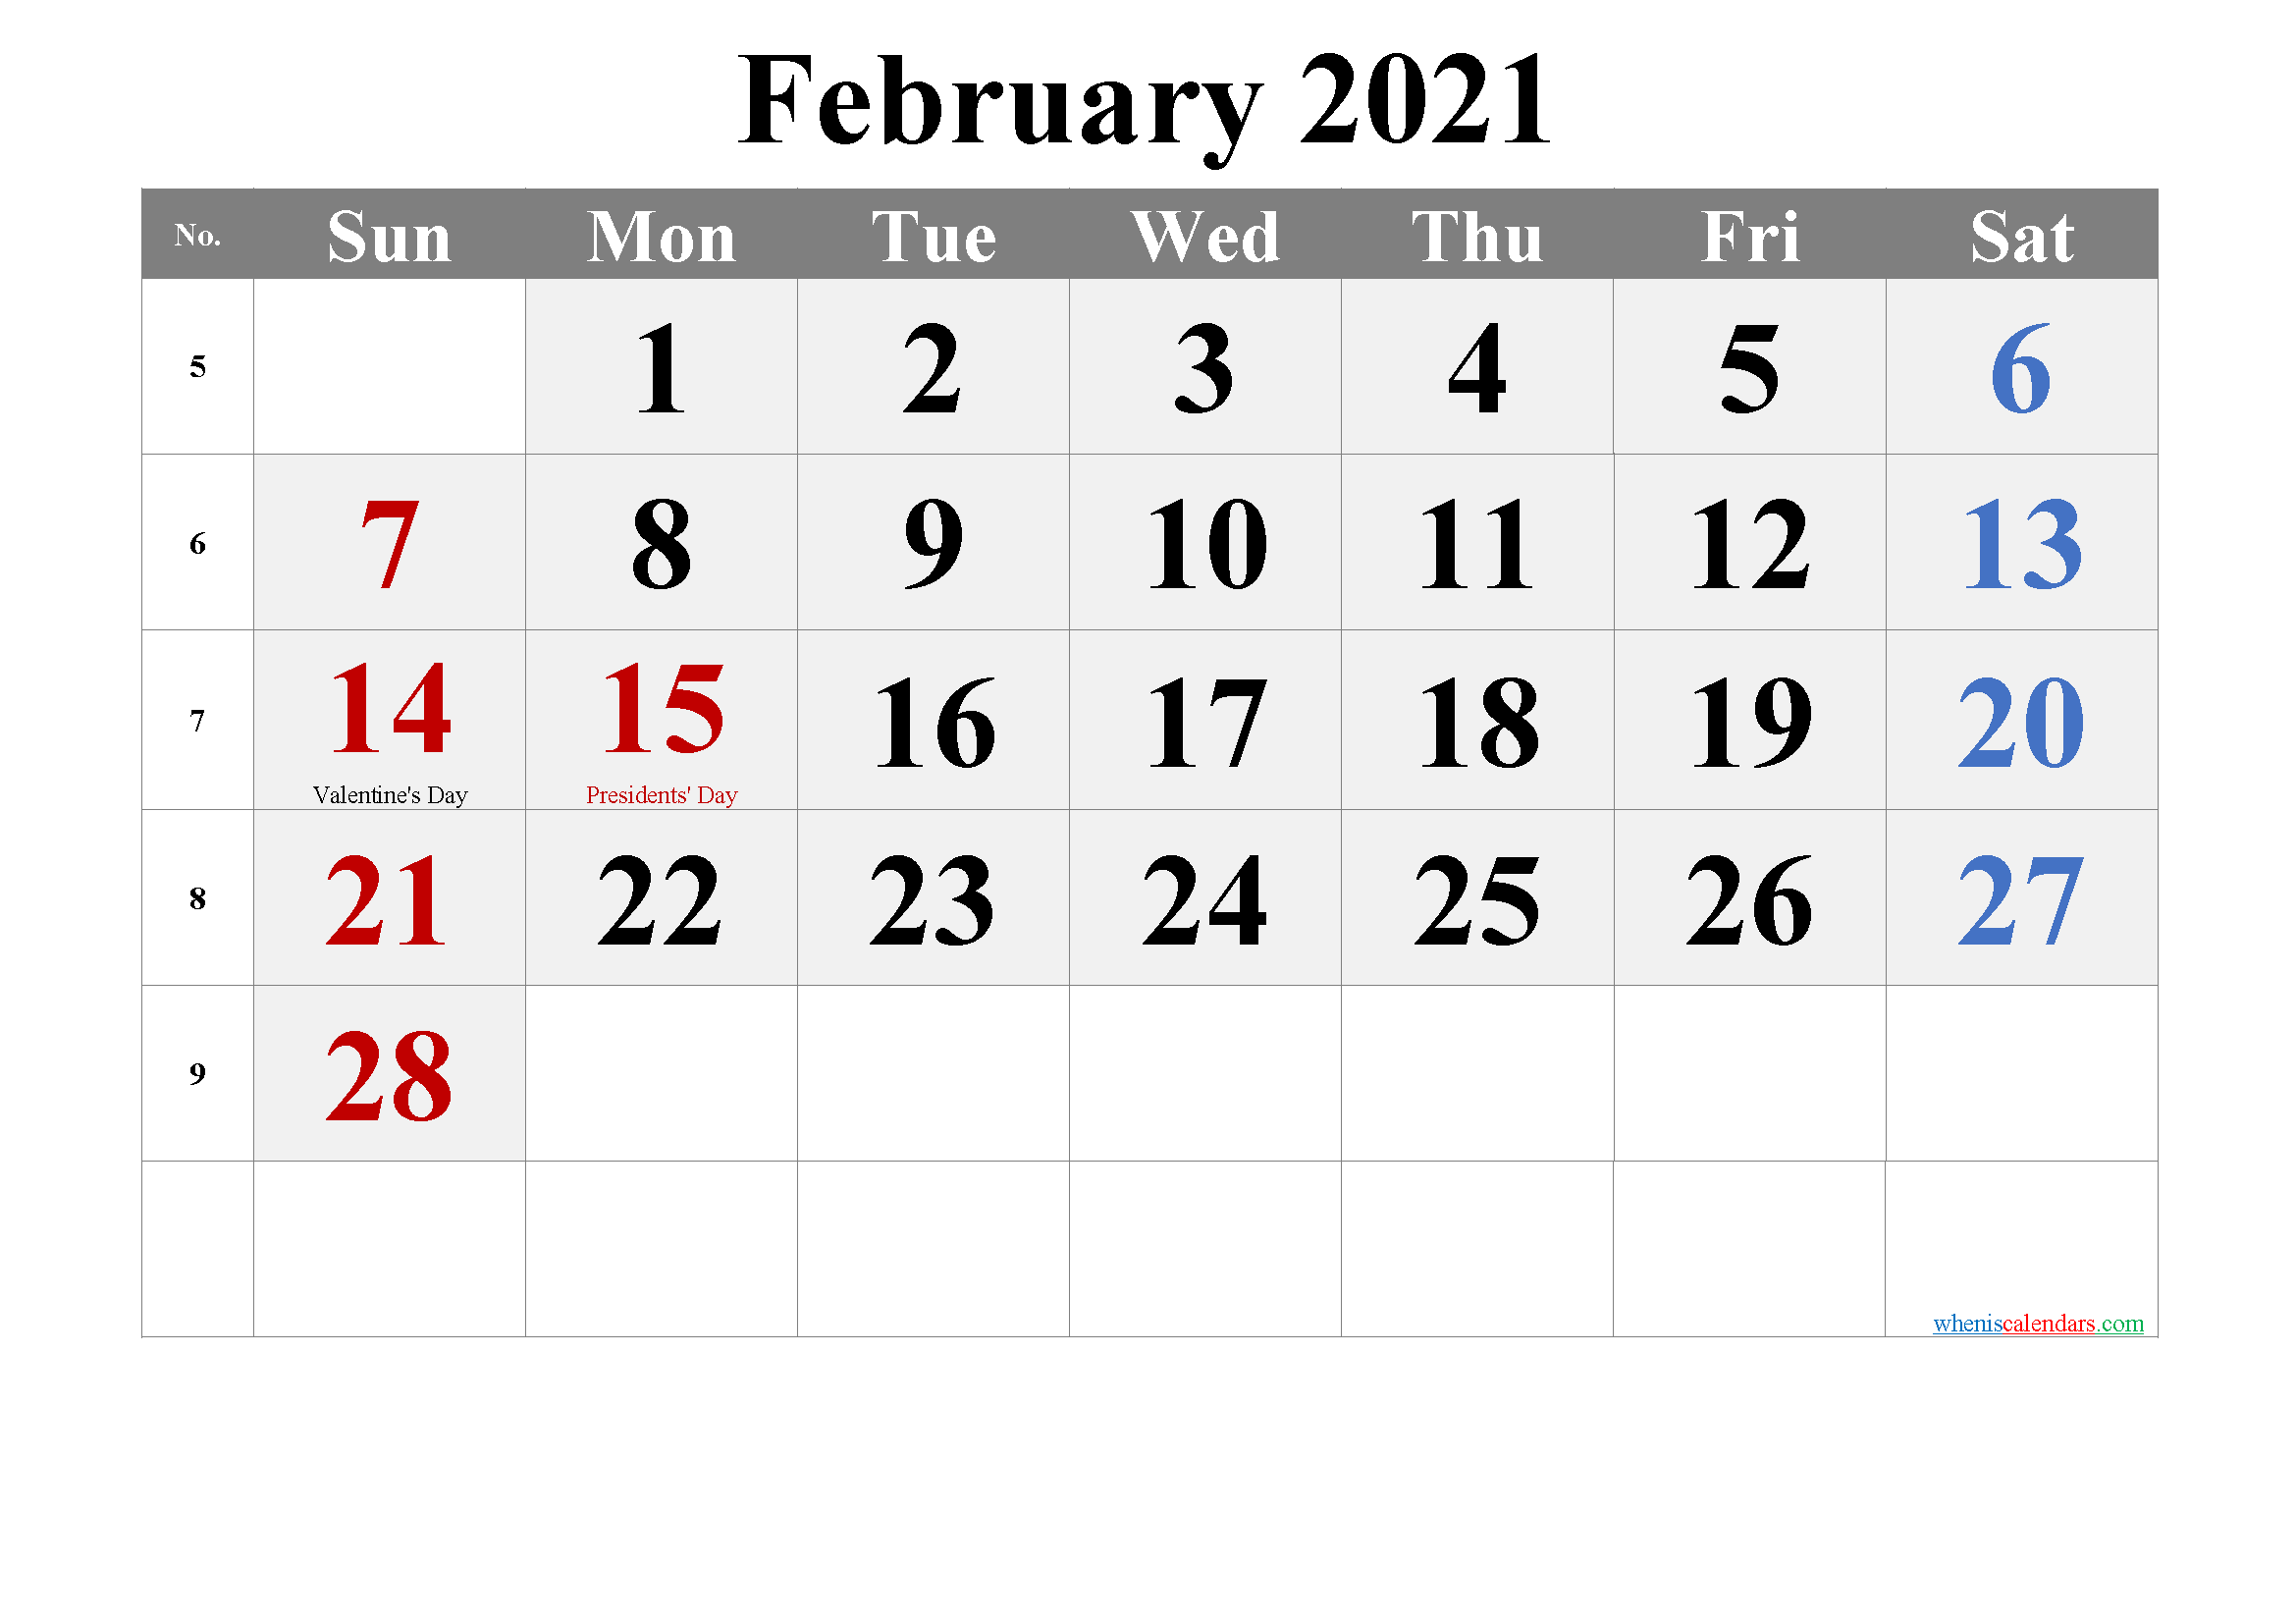 FEBRUARY 2021 Printable Calendar with Holidays